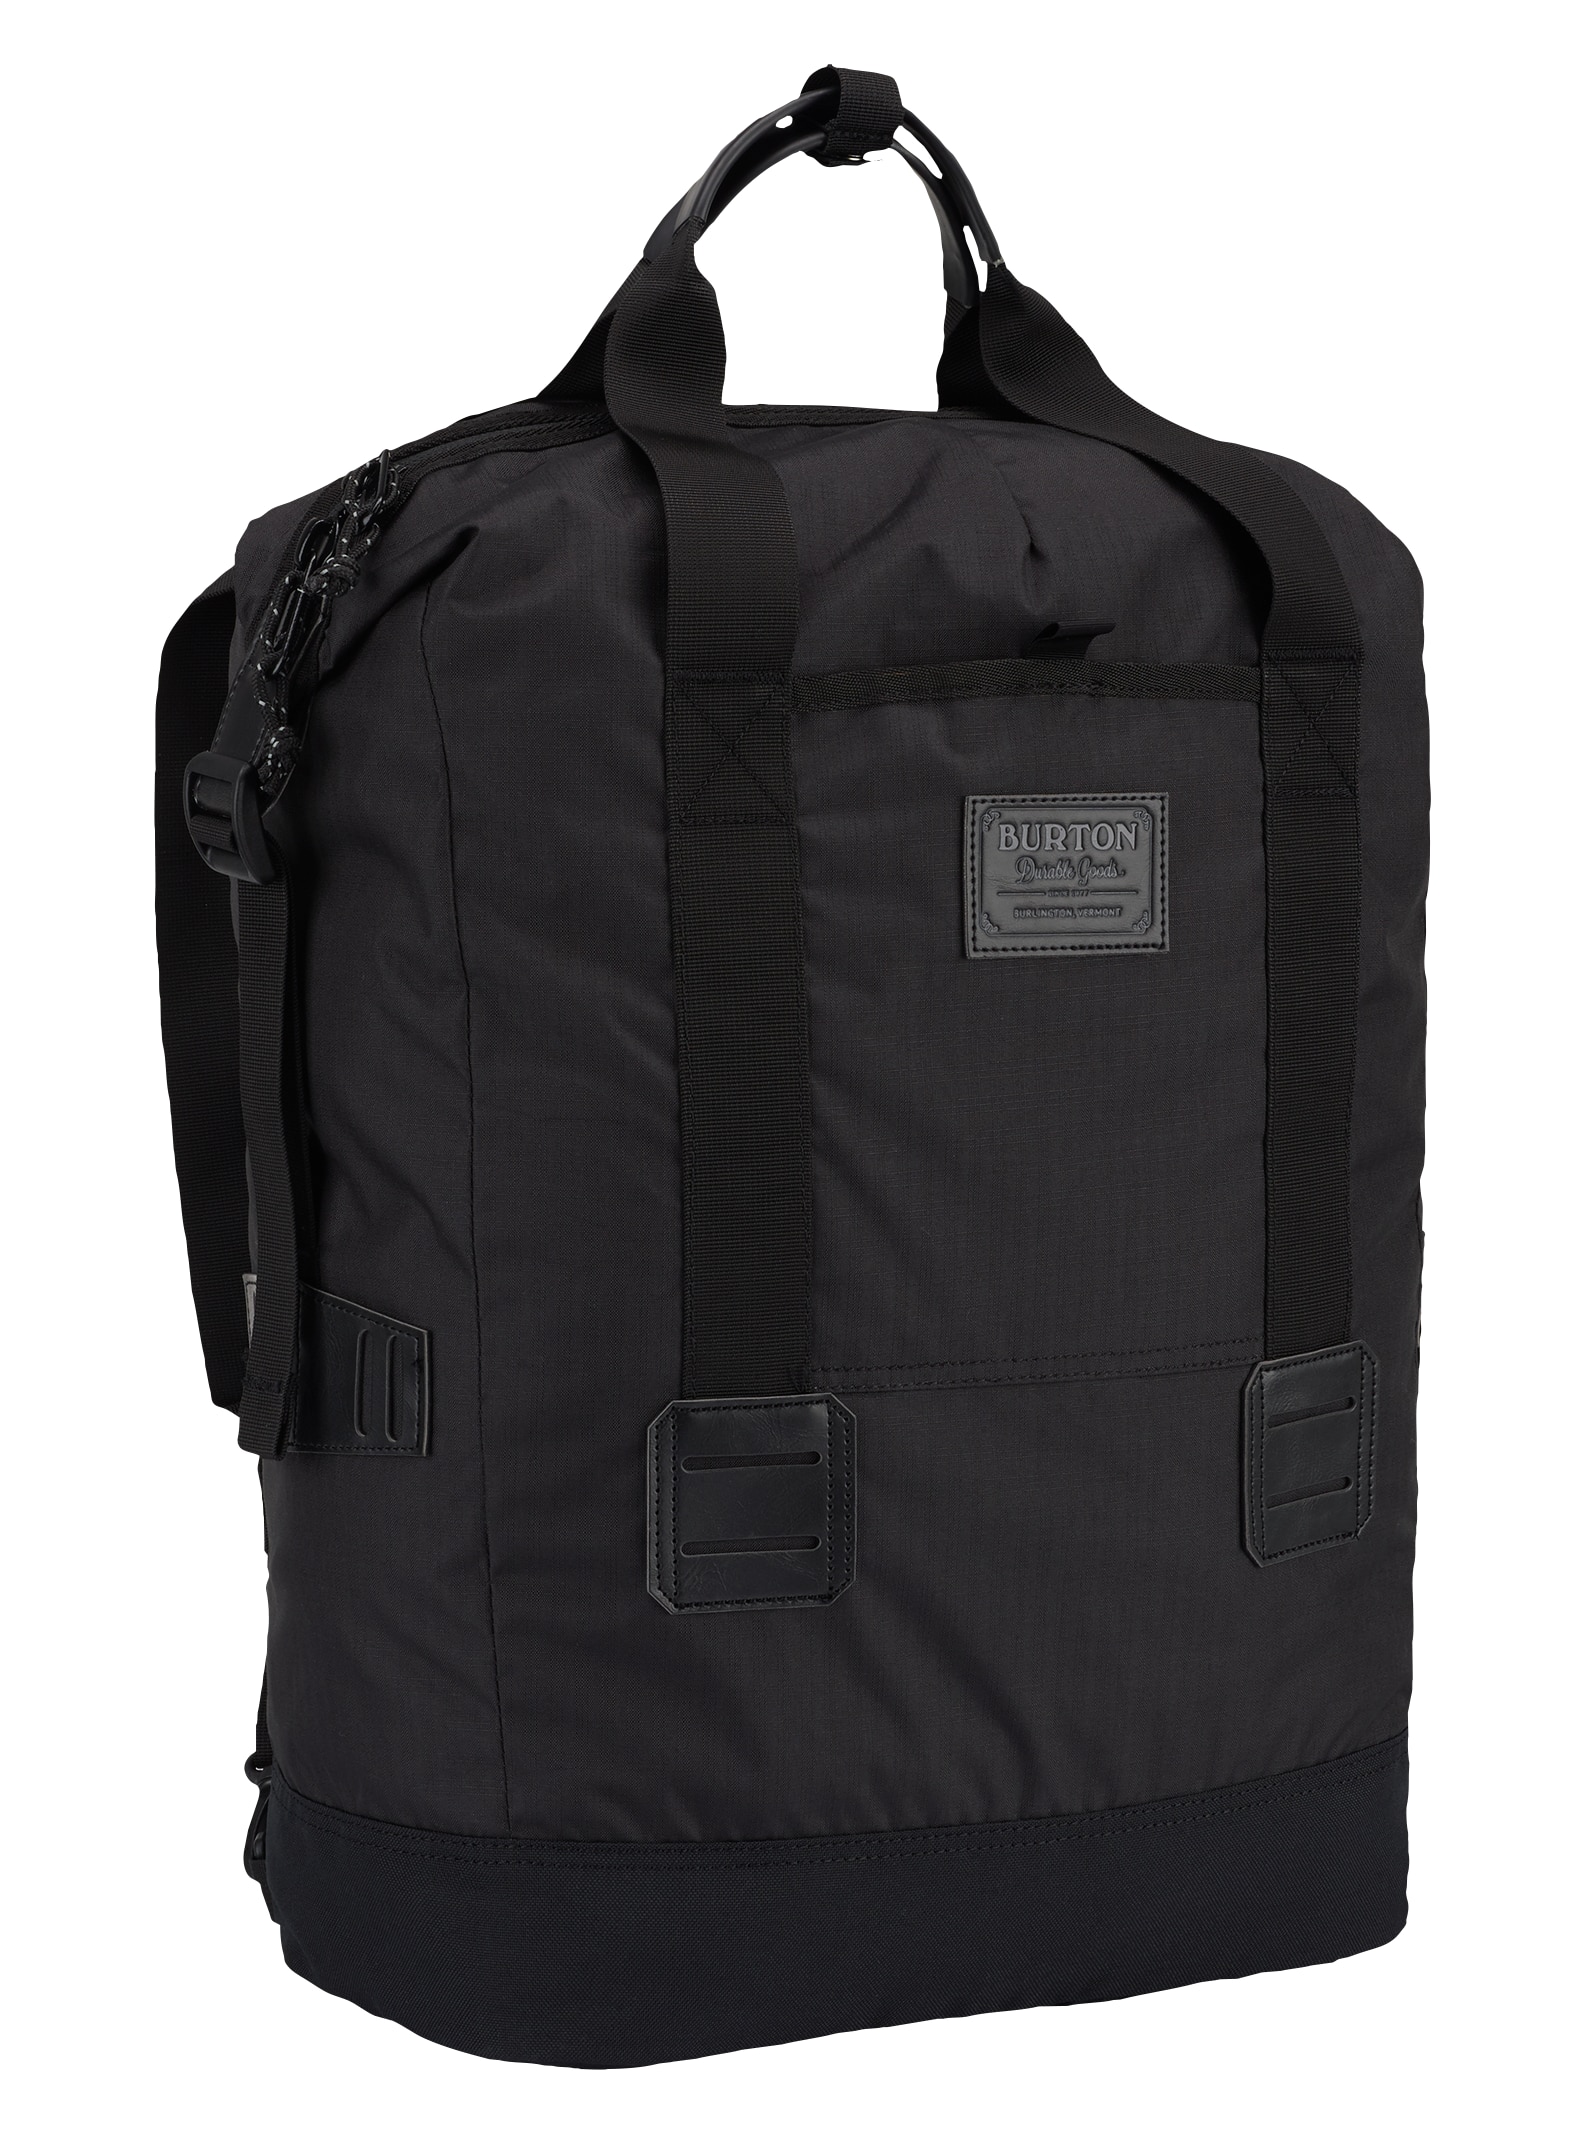 Burton Tinder Tote 25L Backpack | Burton.com Winter 2020 US